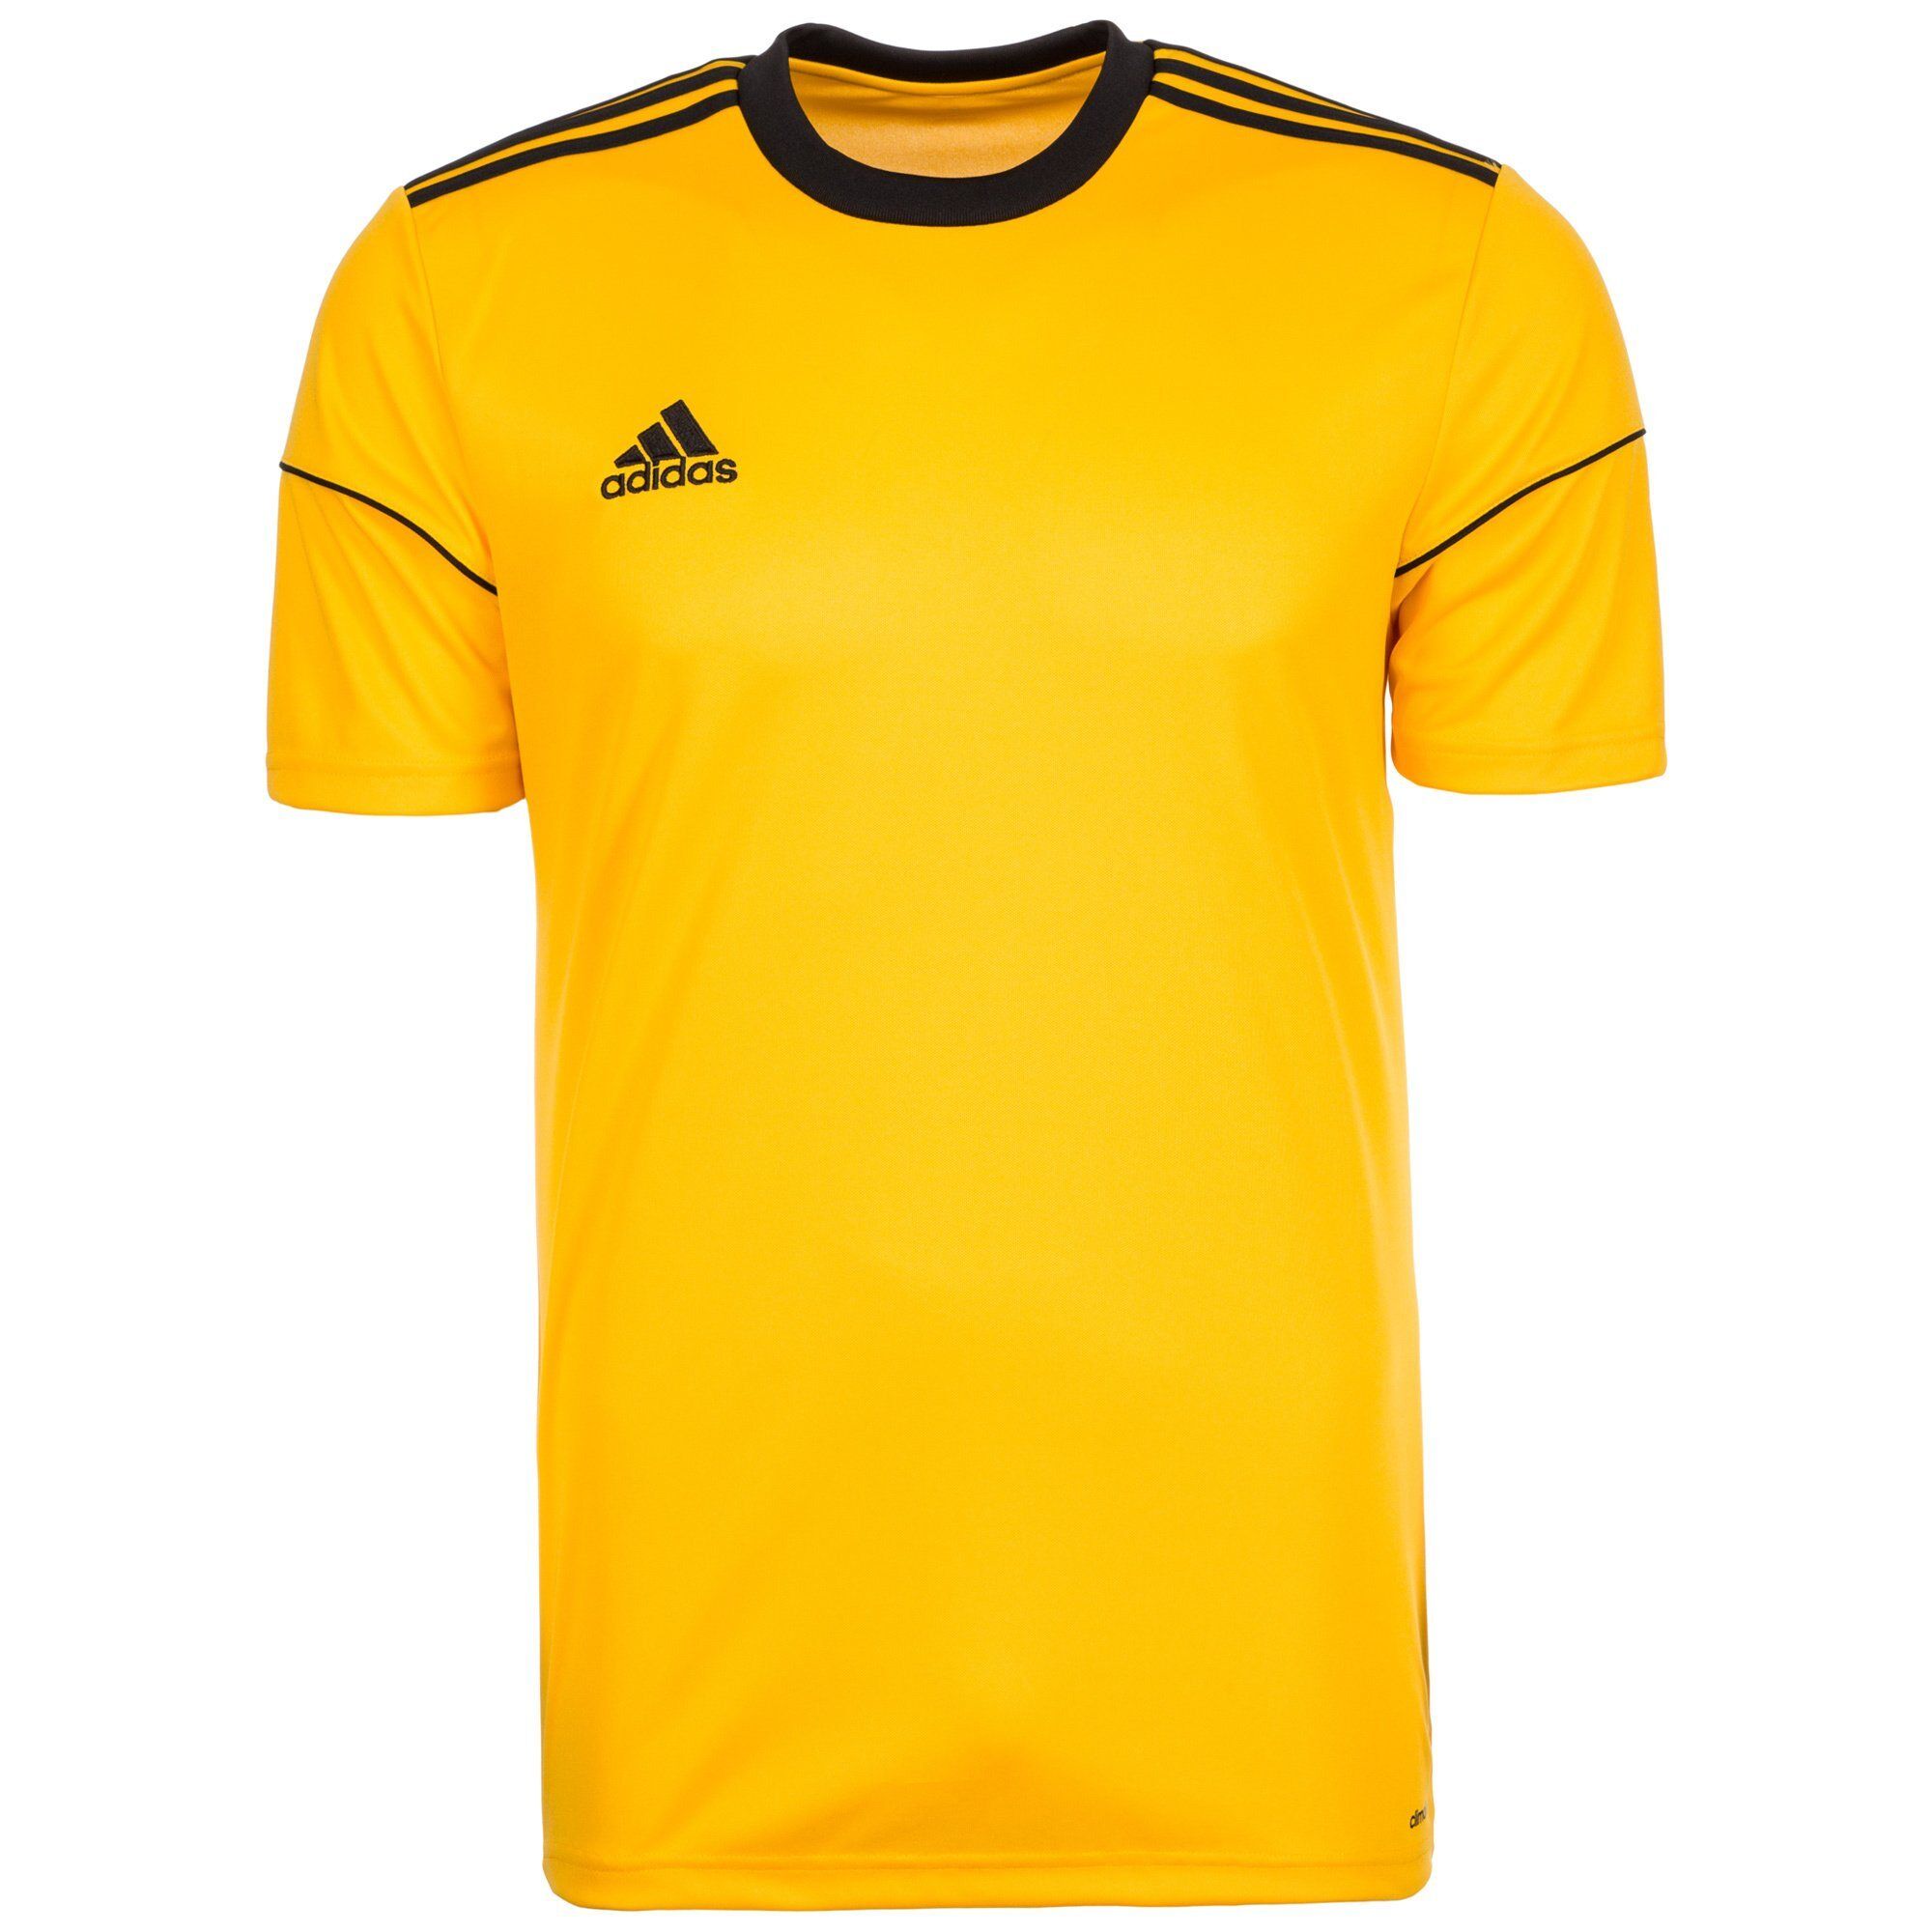 Adidas Performance Fußballtrikot »Squadra 17«, goldfarben-schwarz